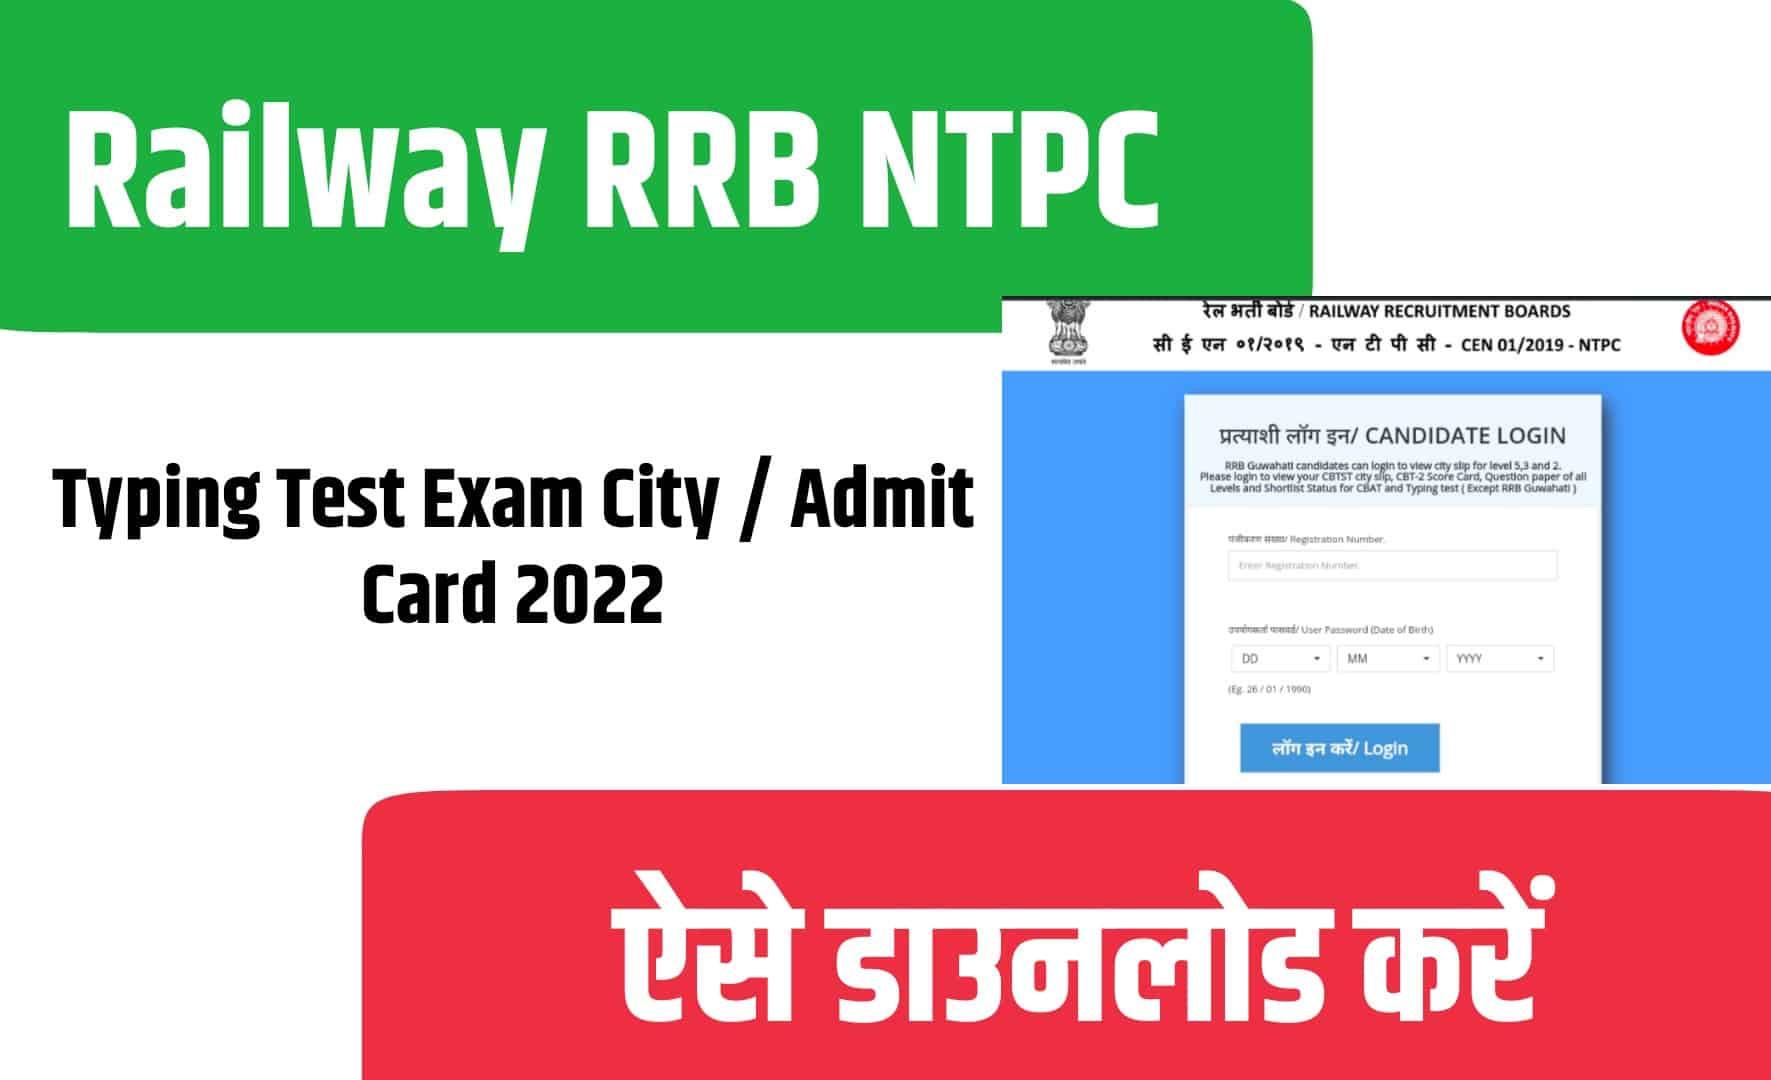 Railway RRB NTPC Typing Test Exam City / Admit Card 2022